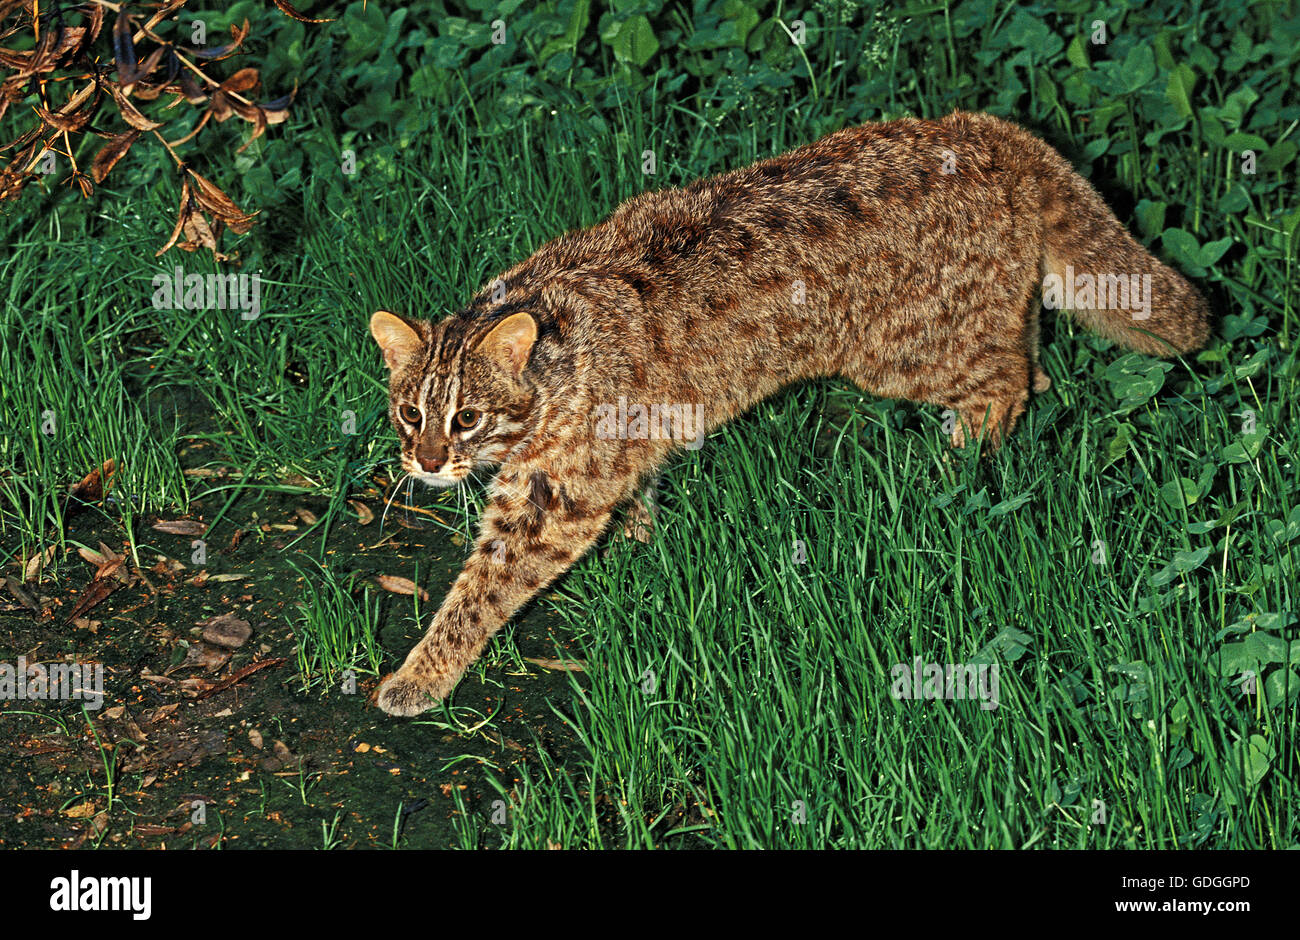 AMUR LEOPARD GATTO SIBERIANO o LEOPARD CAT Prionailurus bengalensis  euptilura Foto stock - Alamy